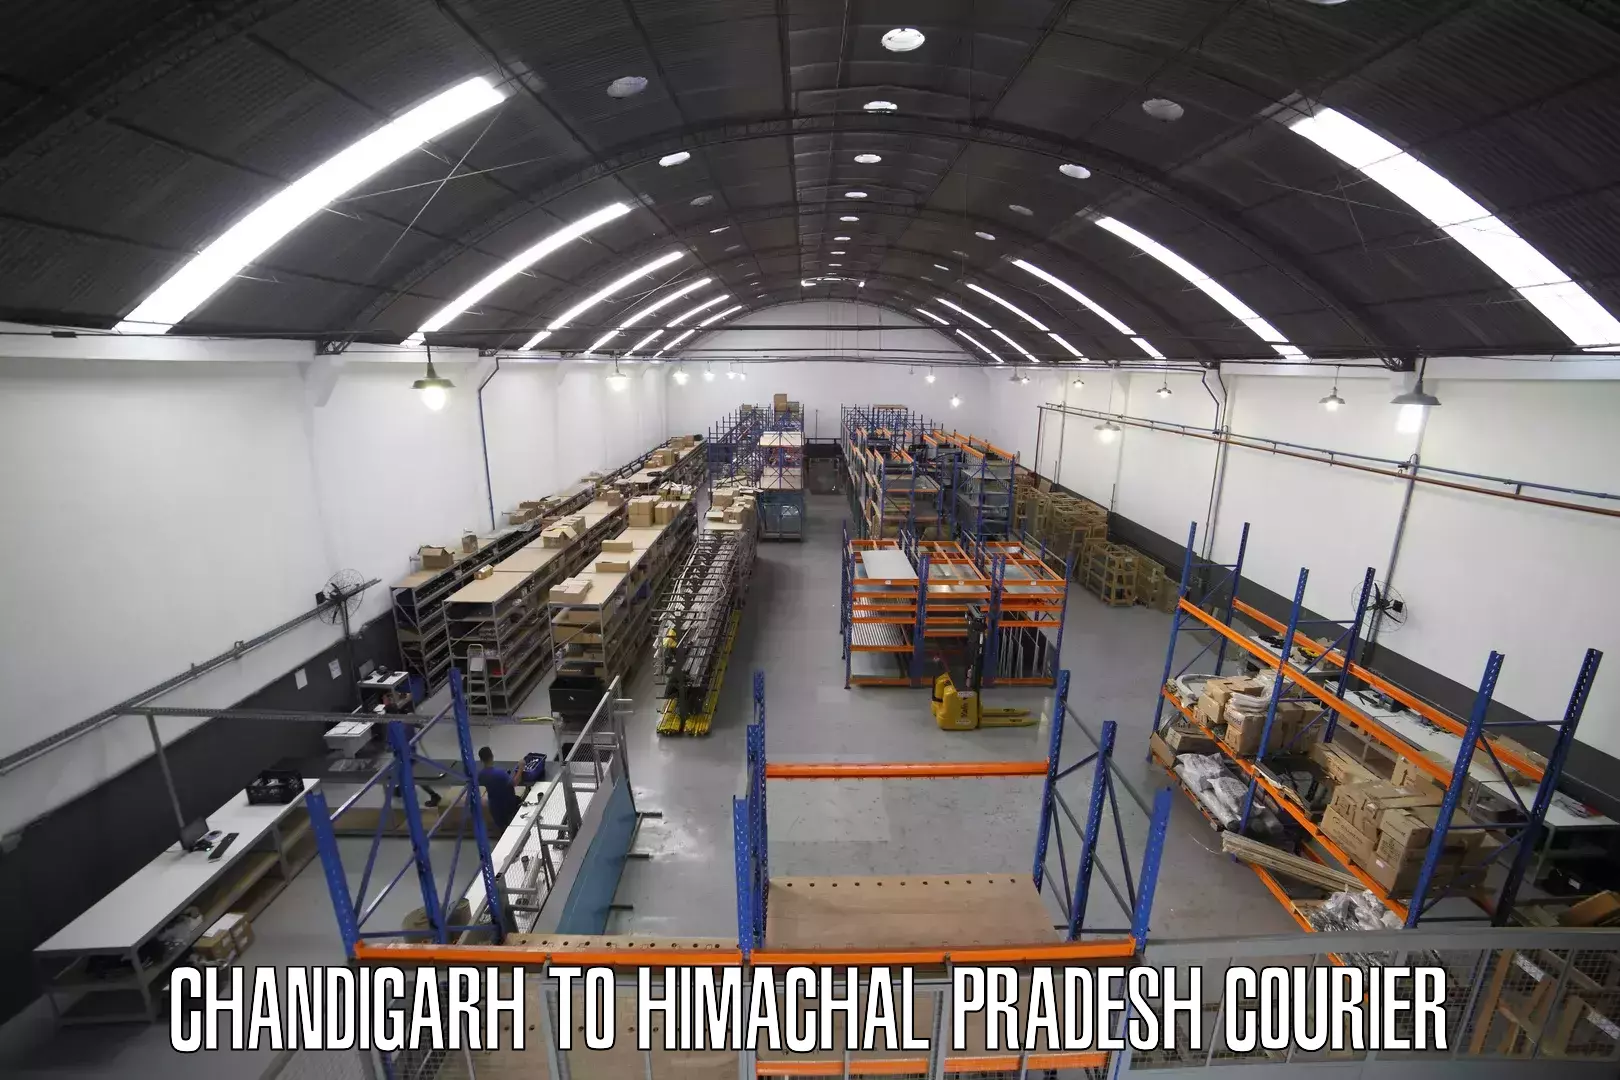 Premium courier solutions Chandigarh to Himachal Pradesh